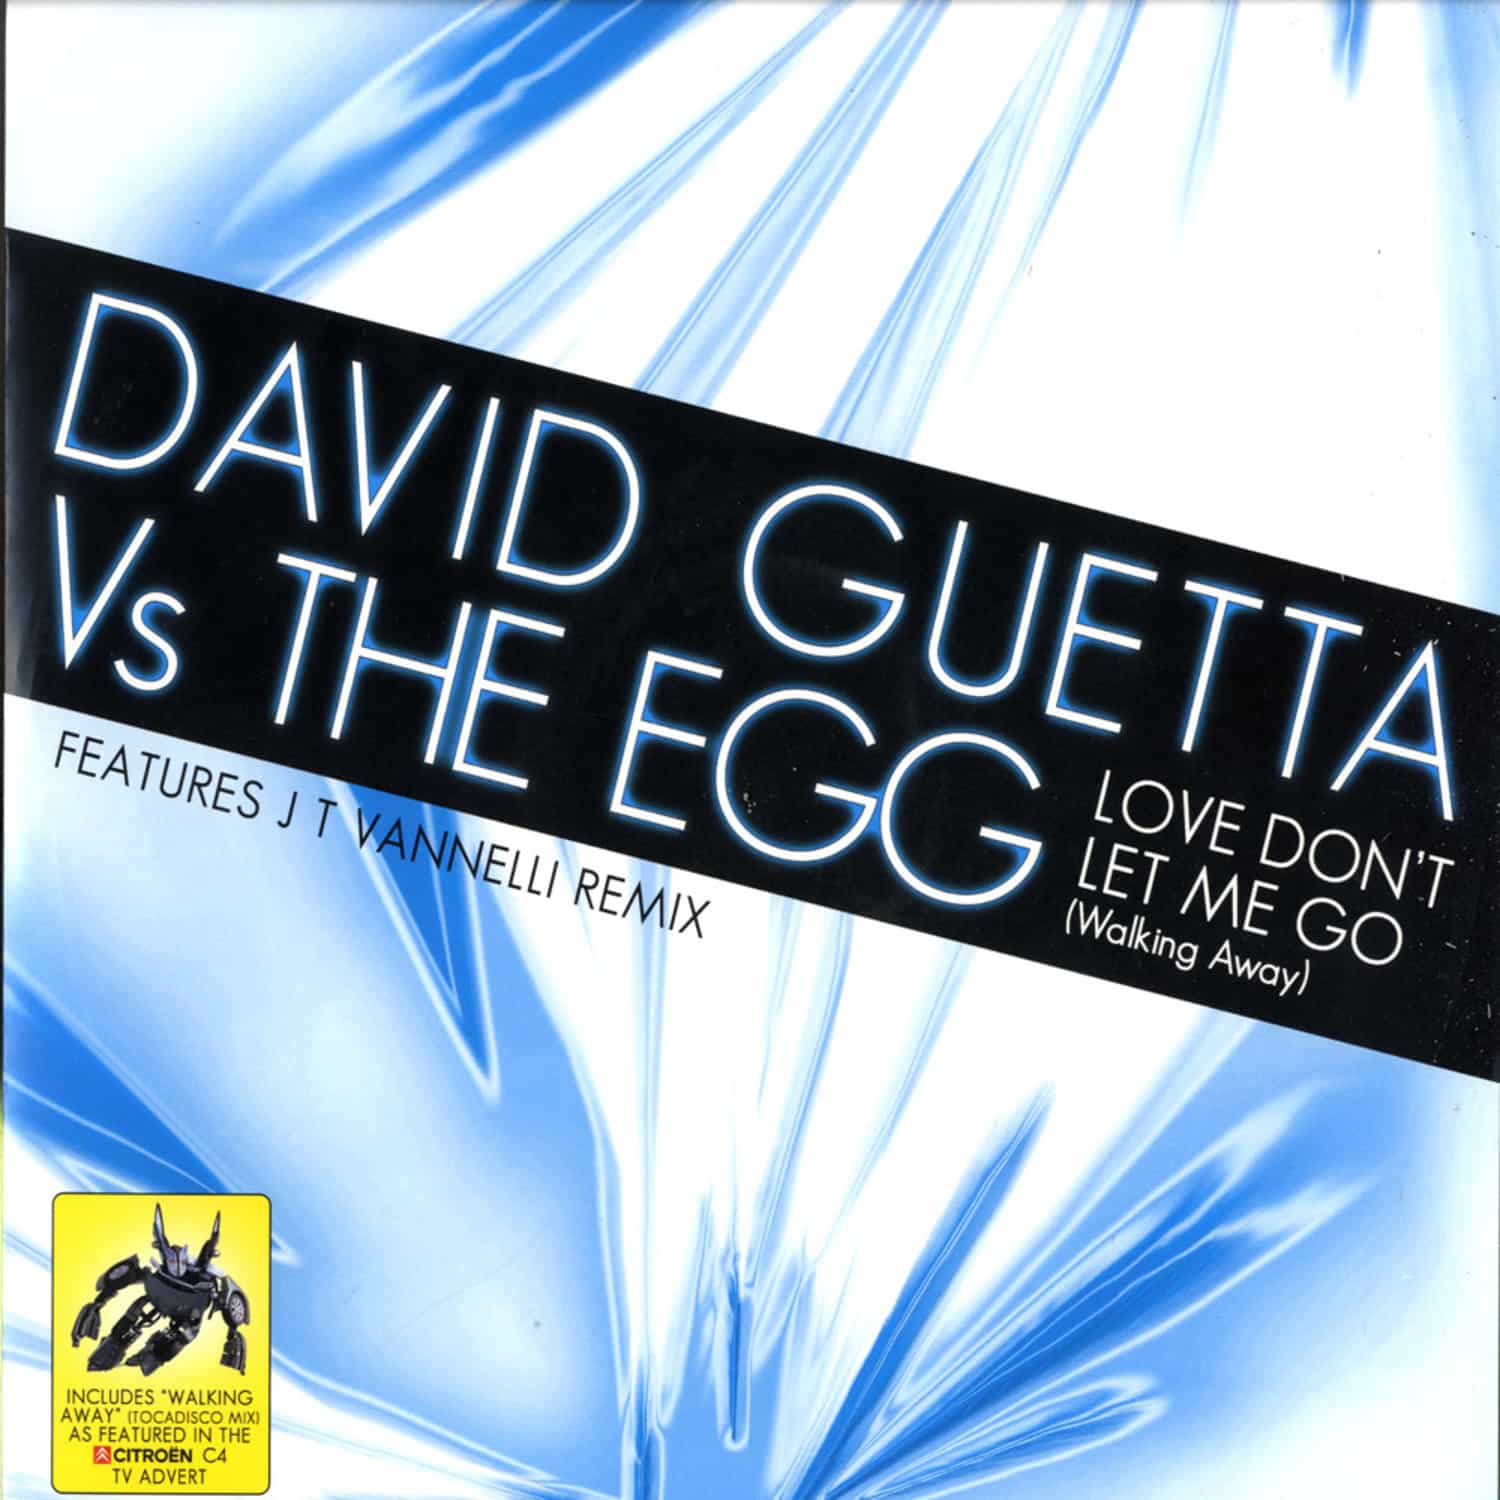 David Guetta vs The Egg - LOVE DONT LET ME GO